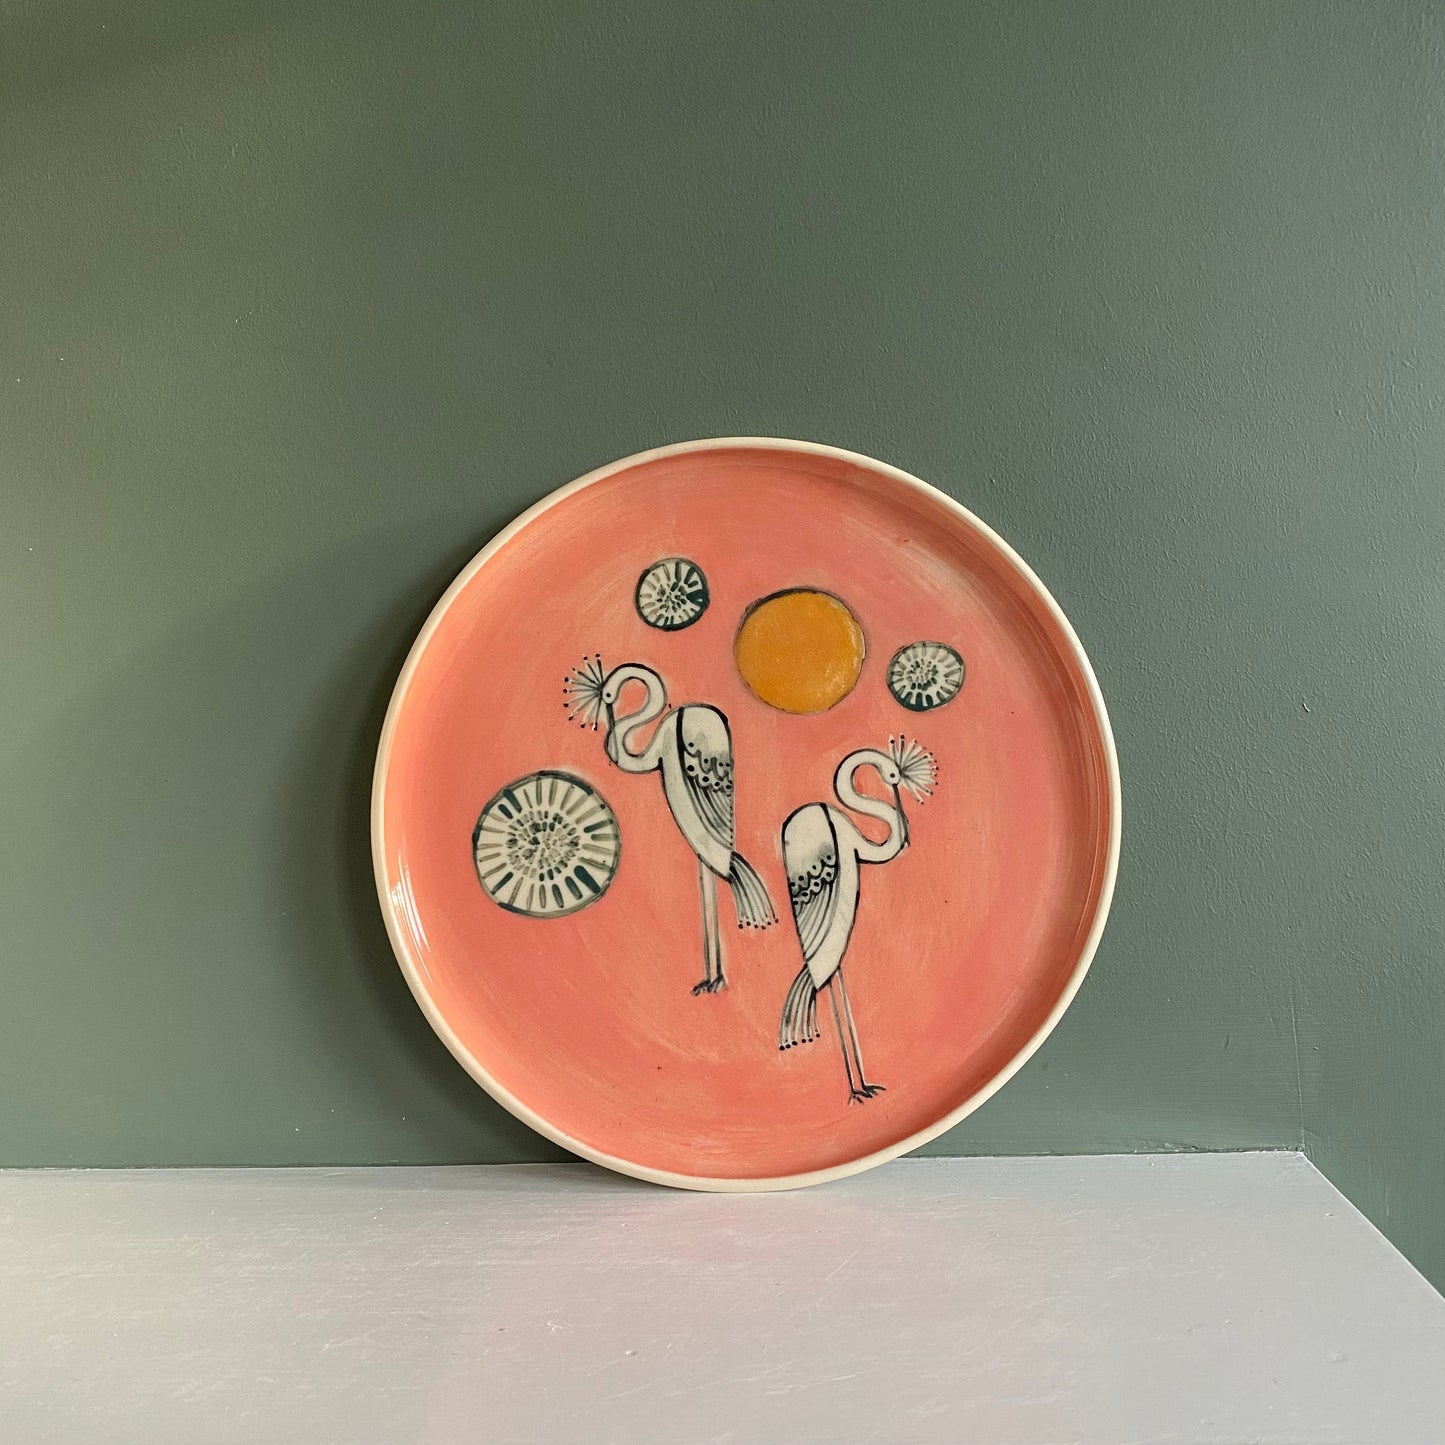 Crane illustrated pink and yellow plate, white stoneware dish